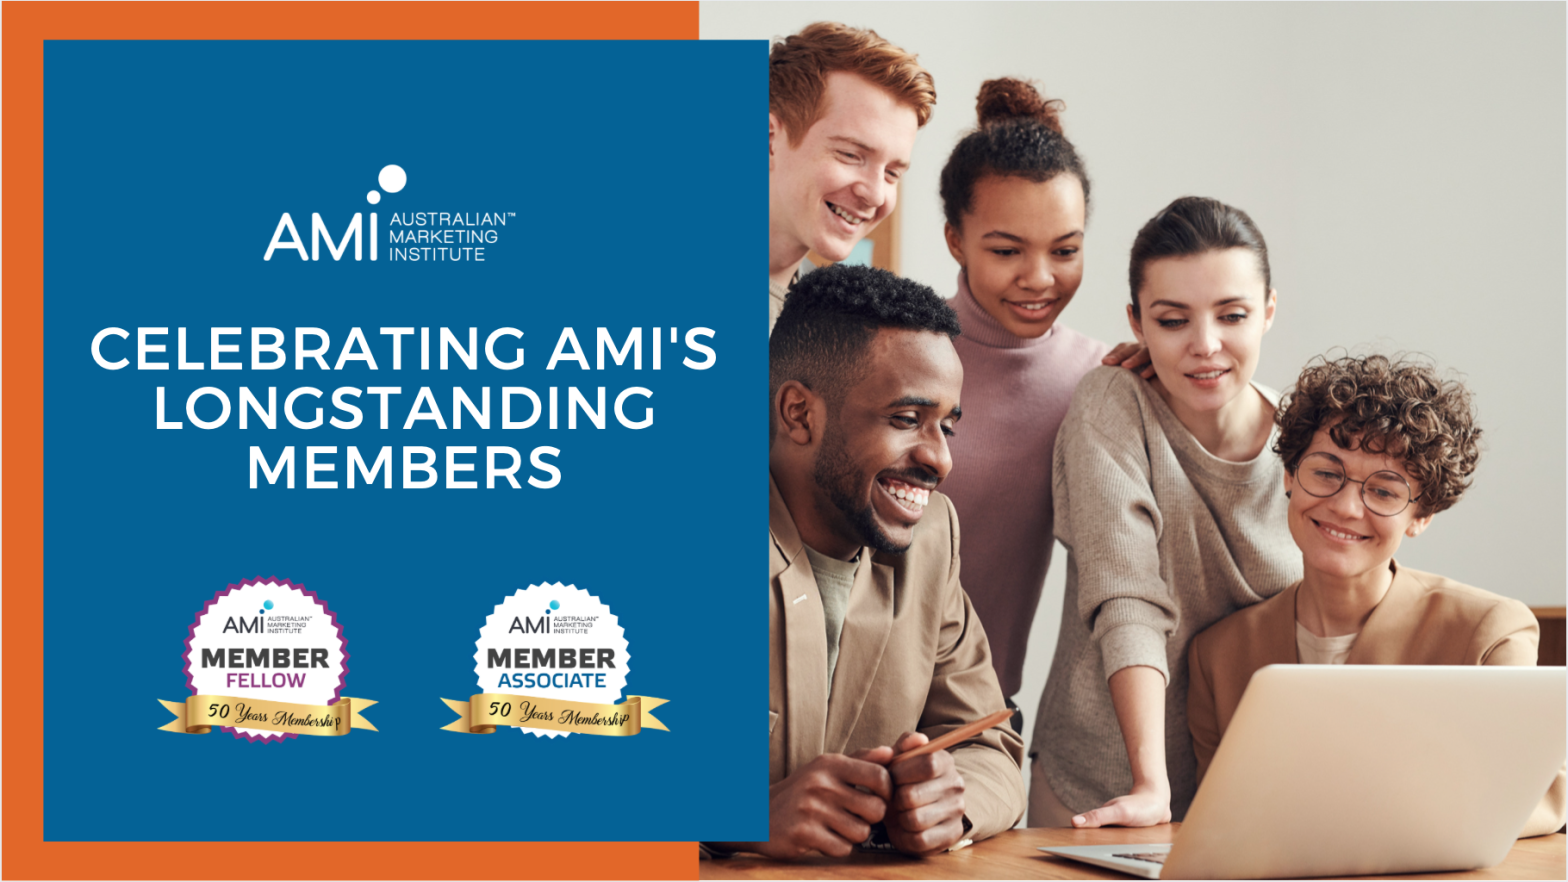 Roll of honour for AMI’s longstanding members – November 2020